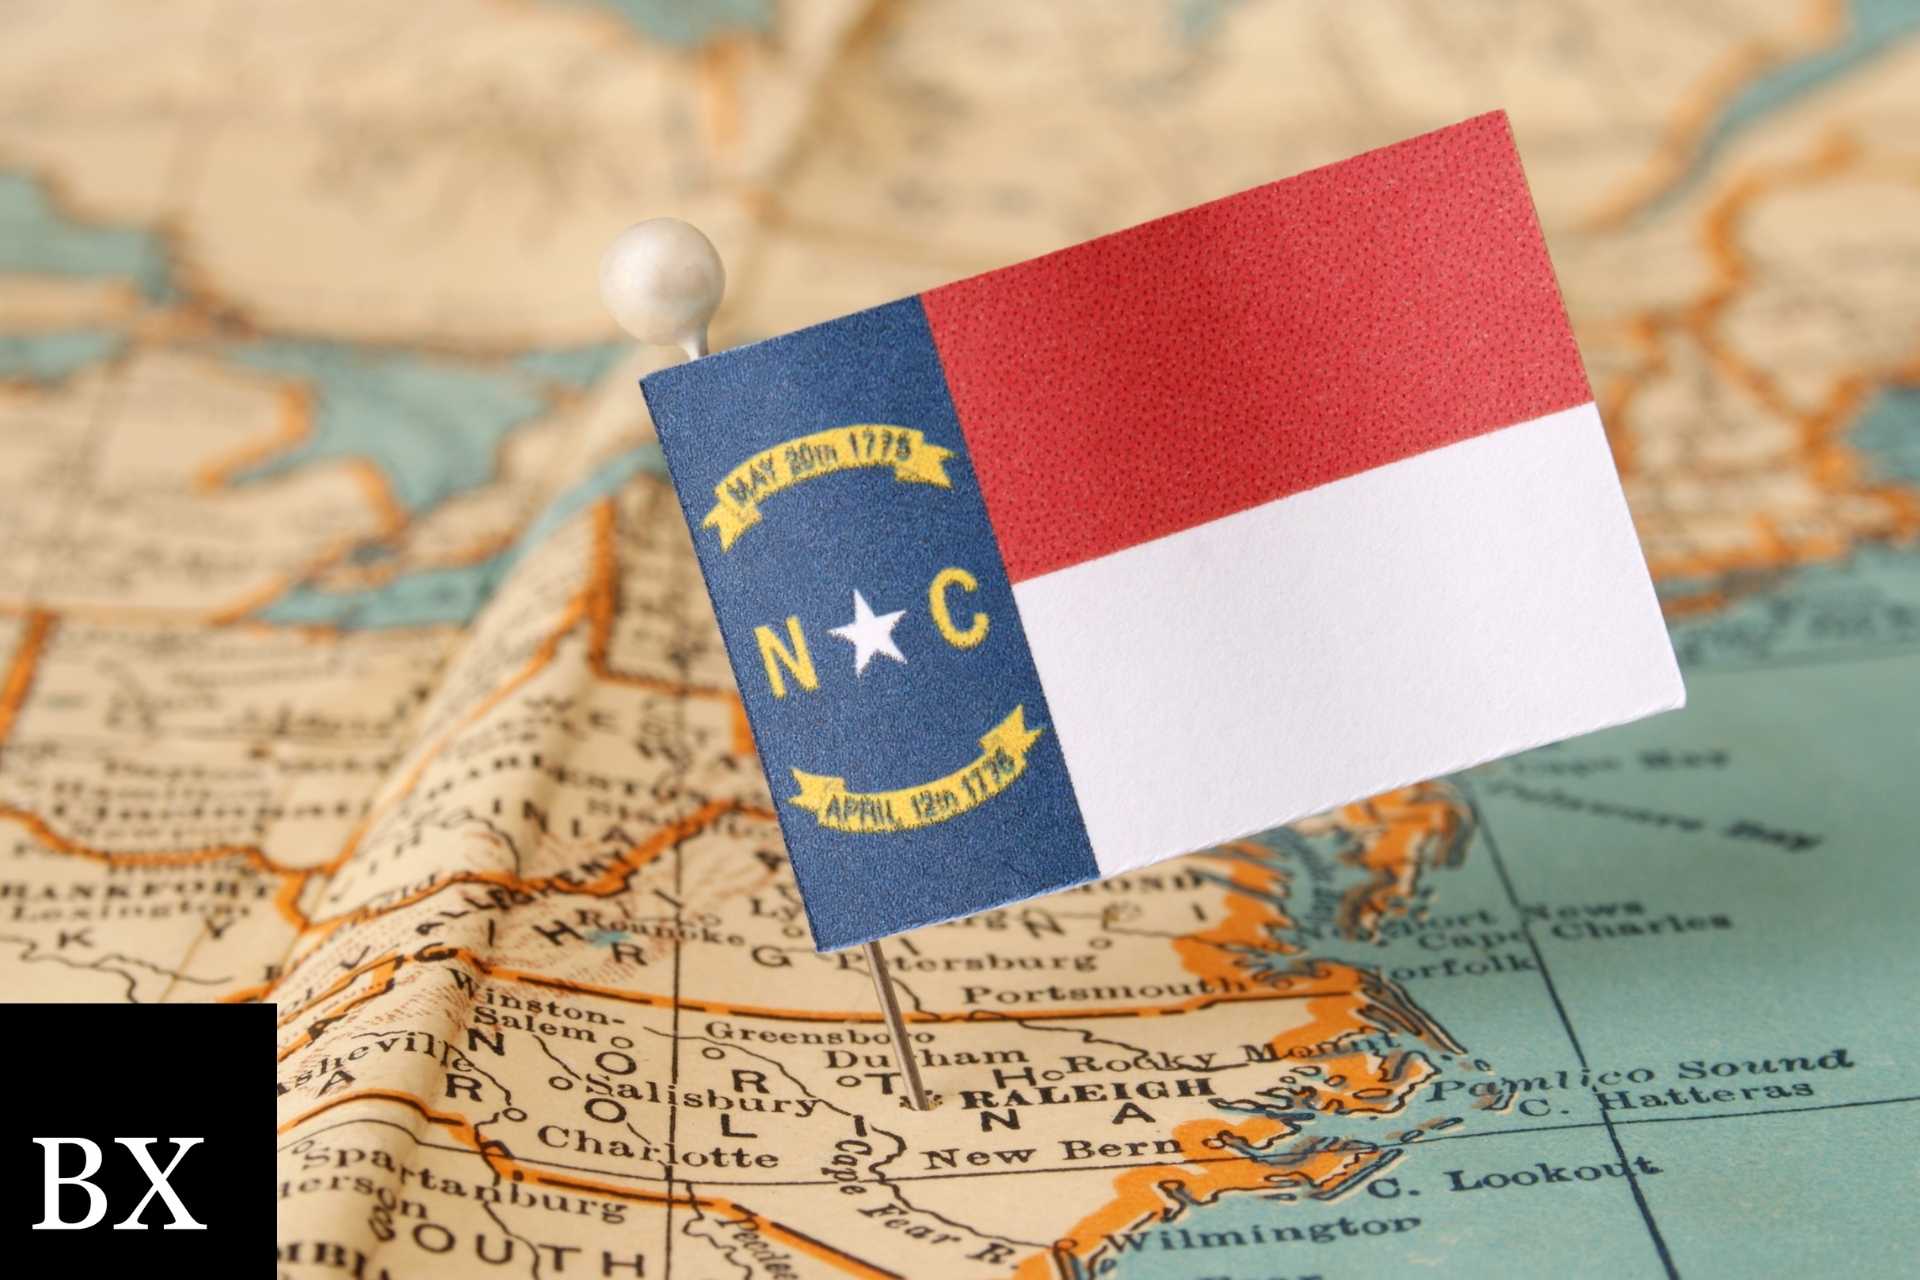 North Carolina Statement of Bonding Ability